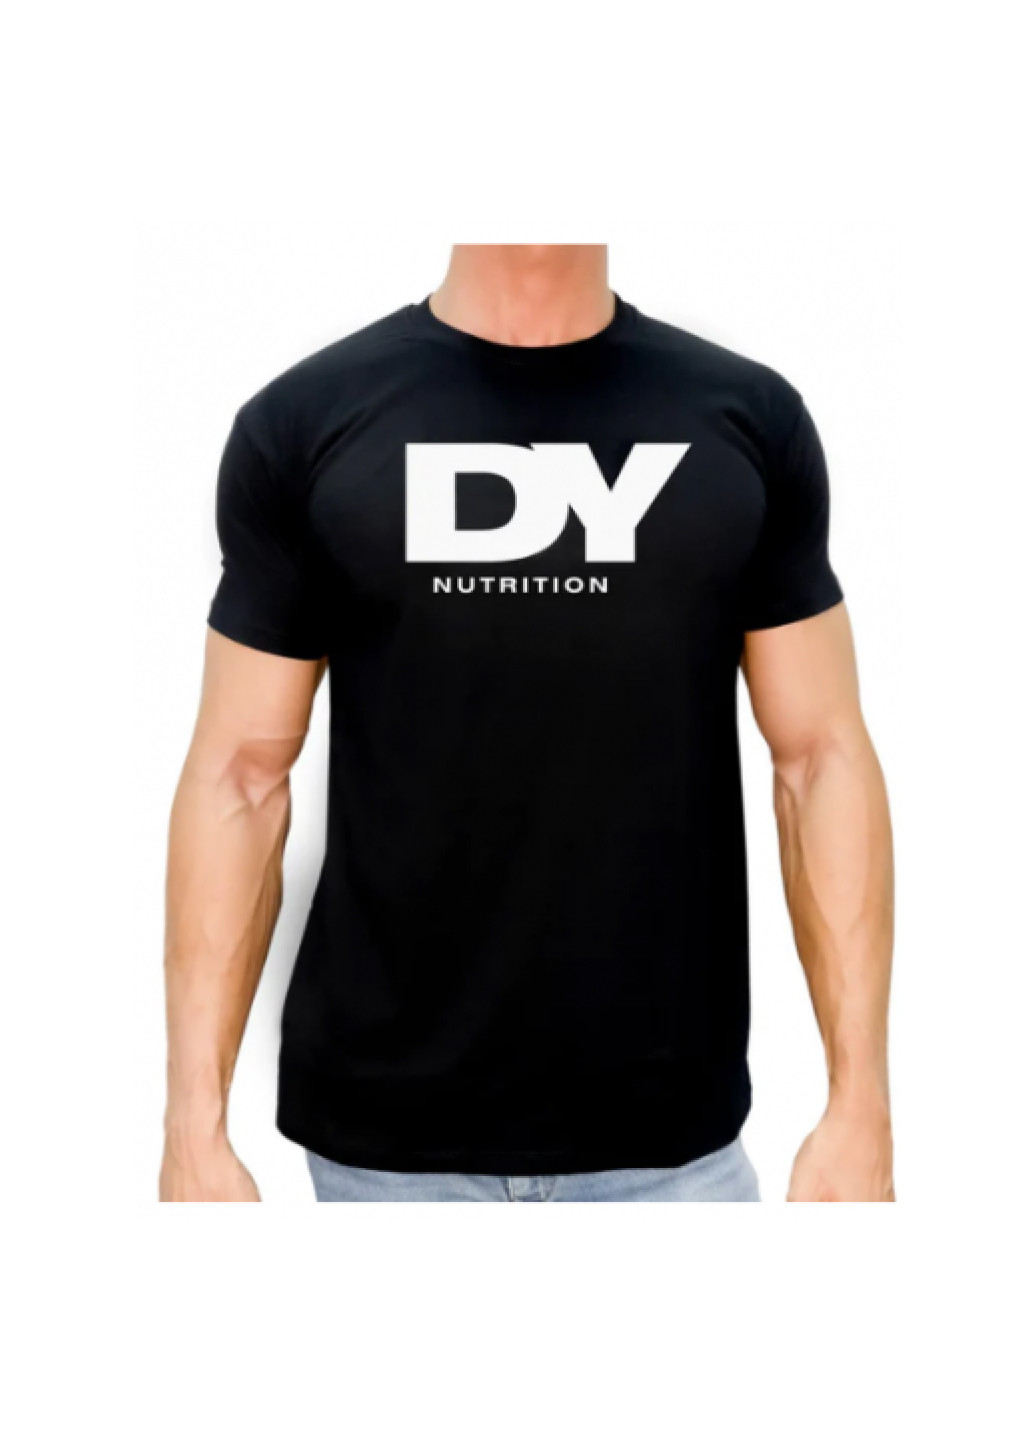 Черная футболка мужская m t-shirt imperial black -m DY Nutrition